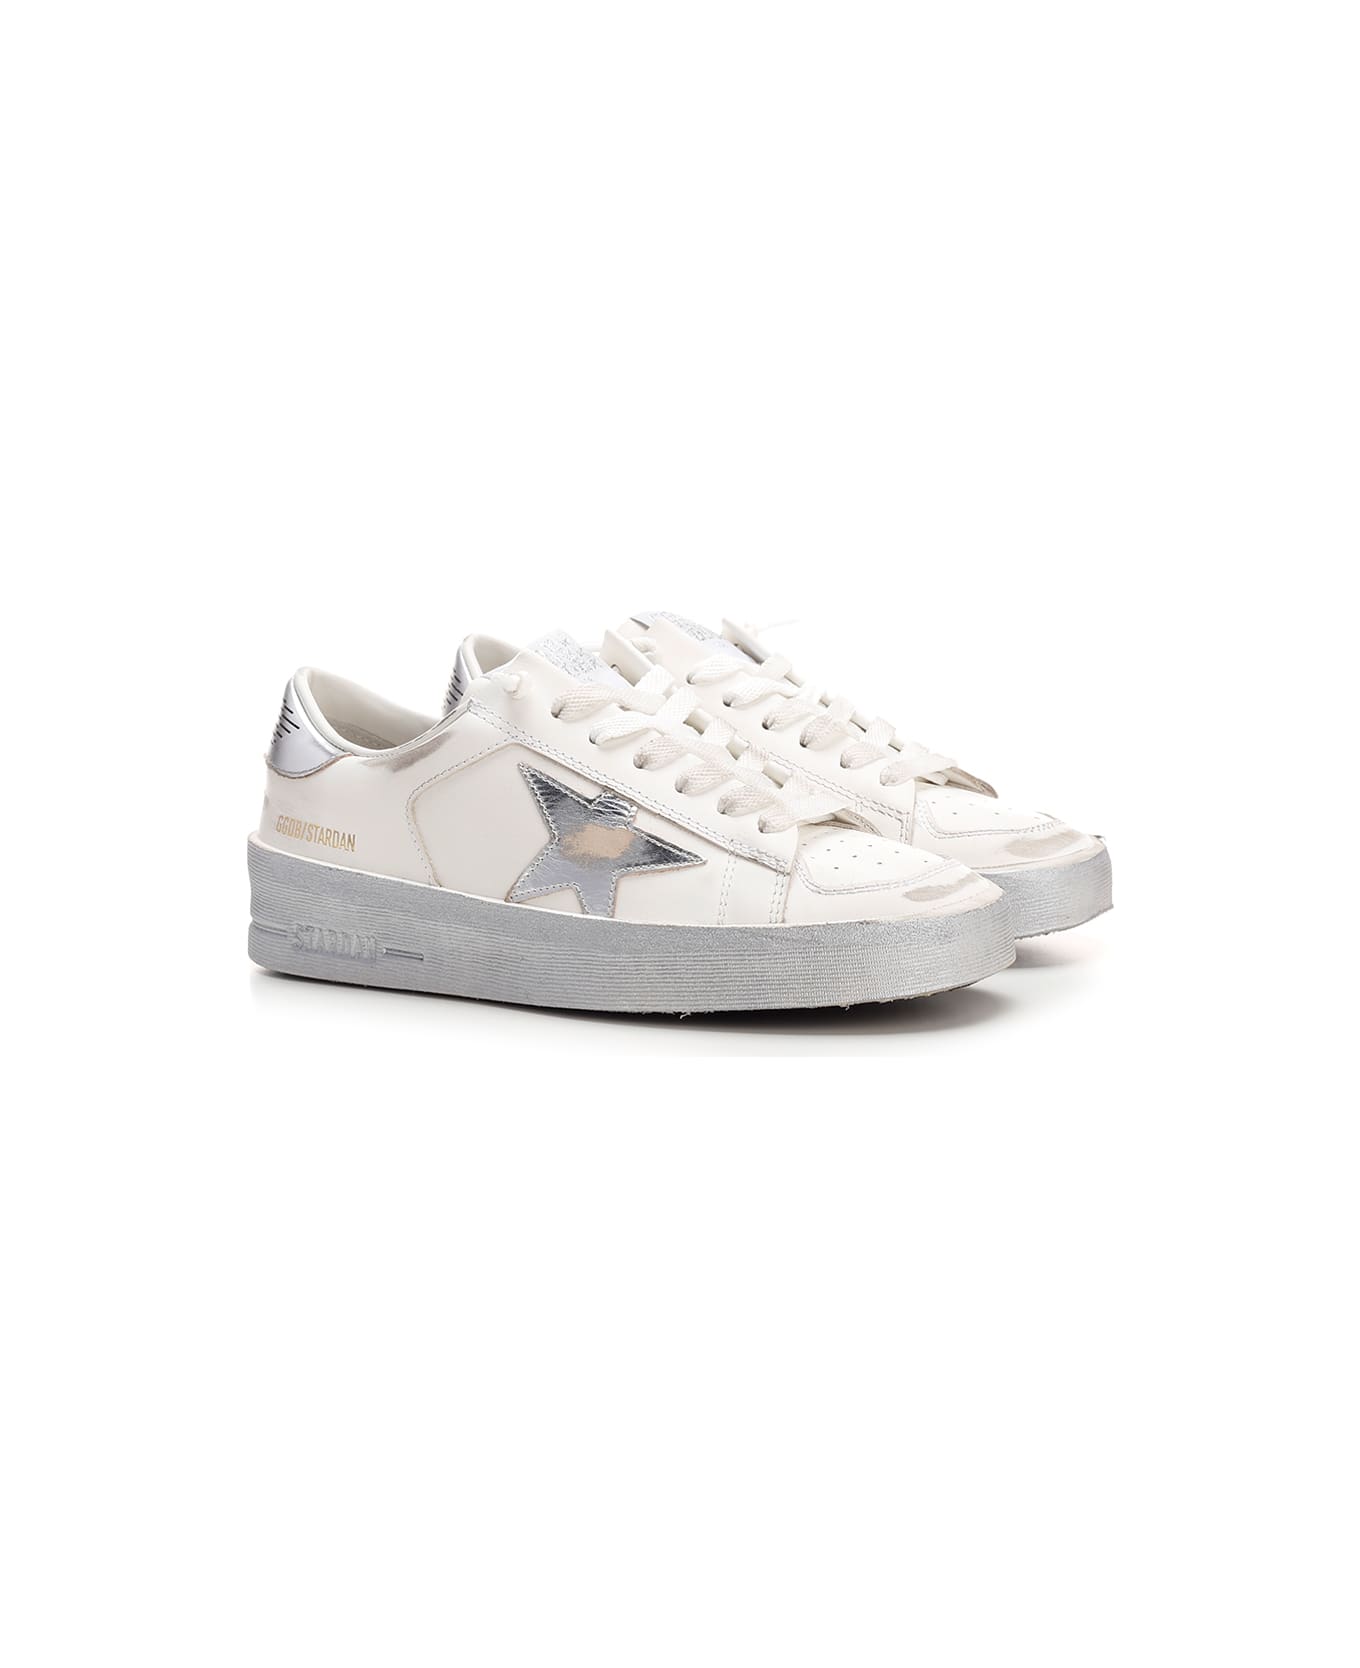 Golden Goose Stardan Sneakers - White/Silver